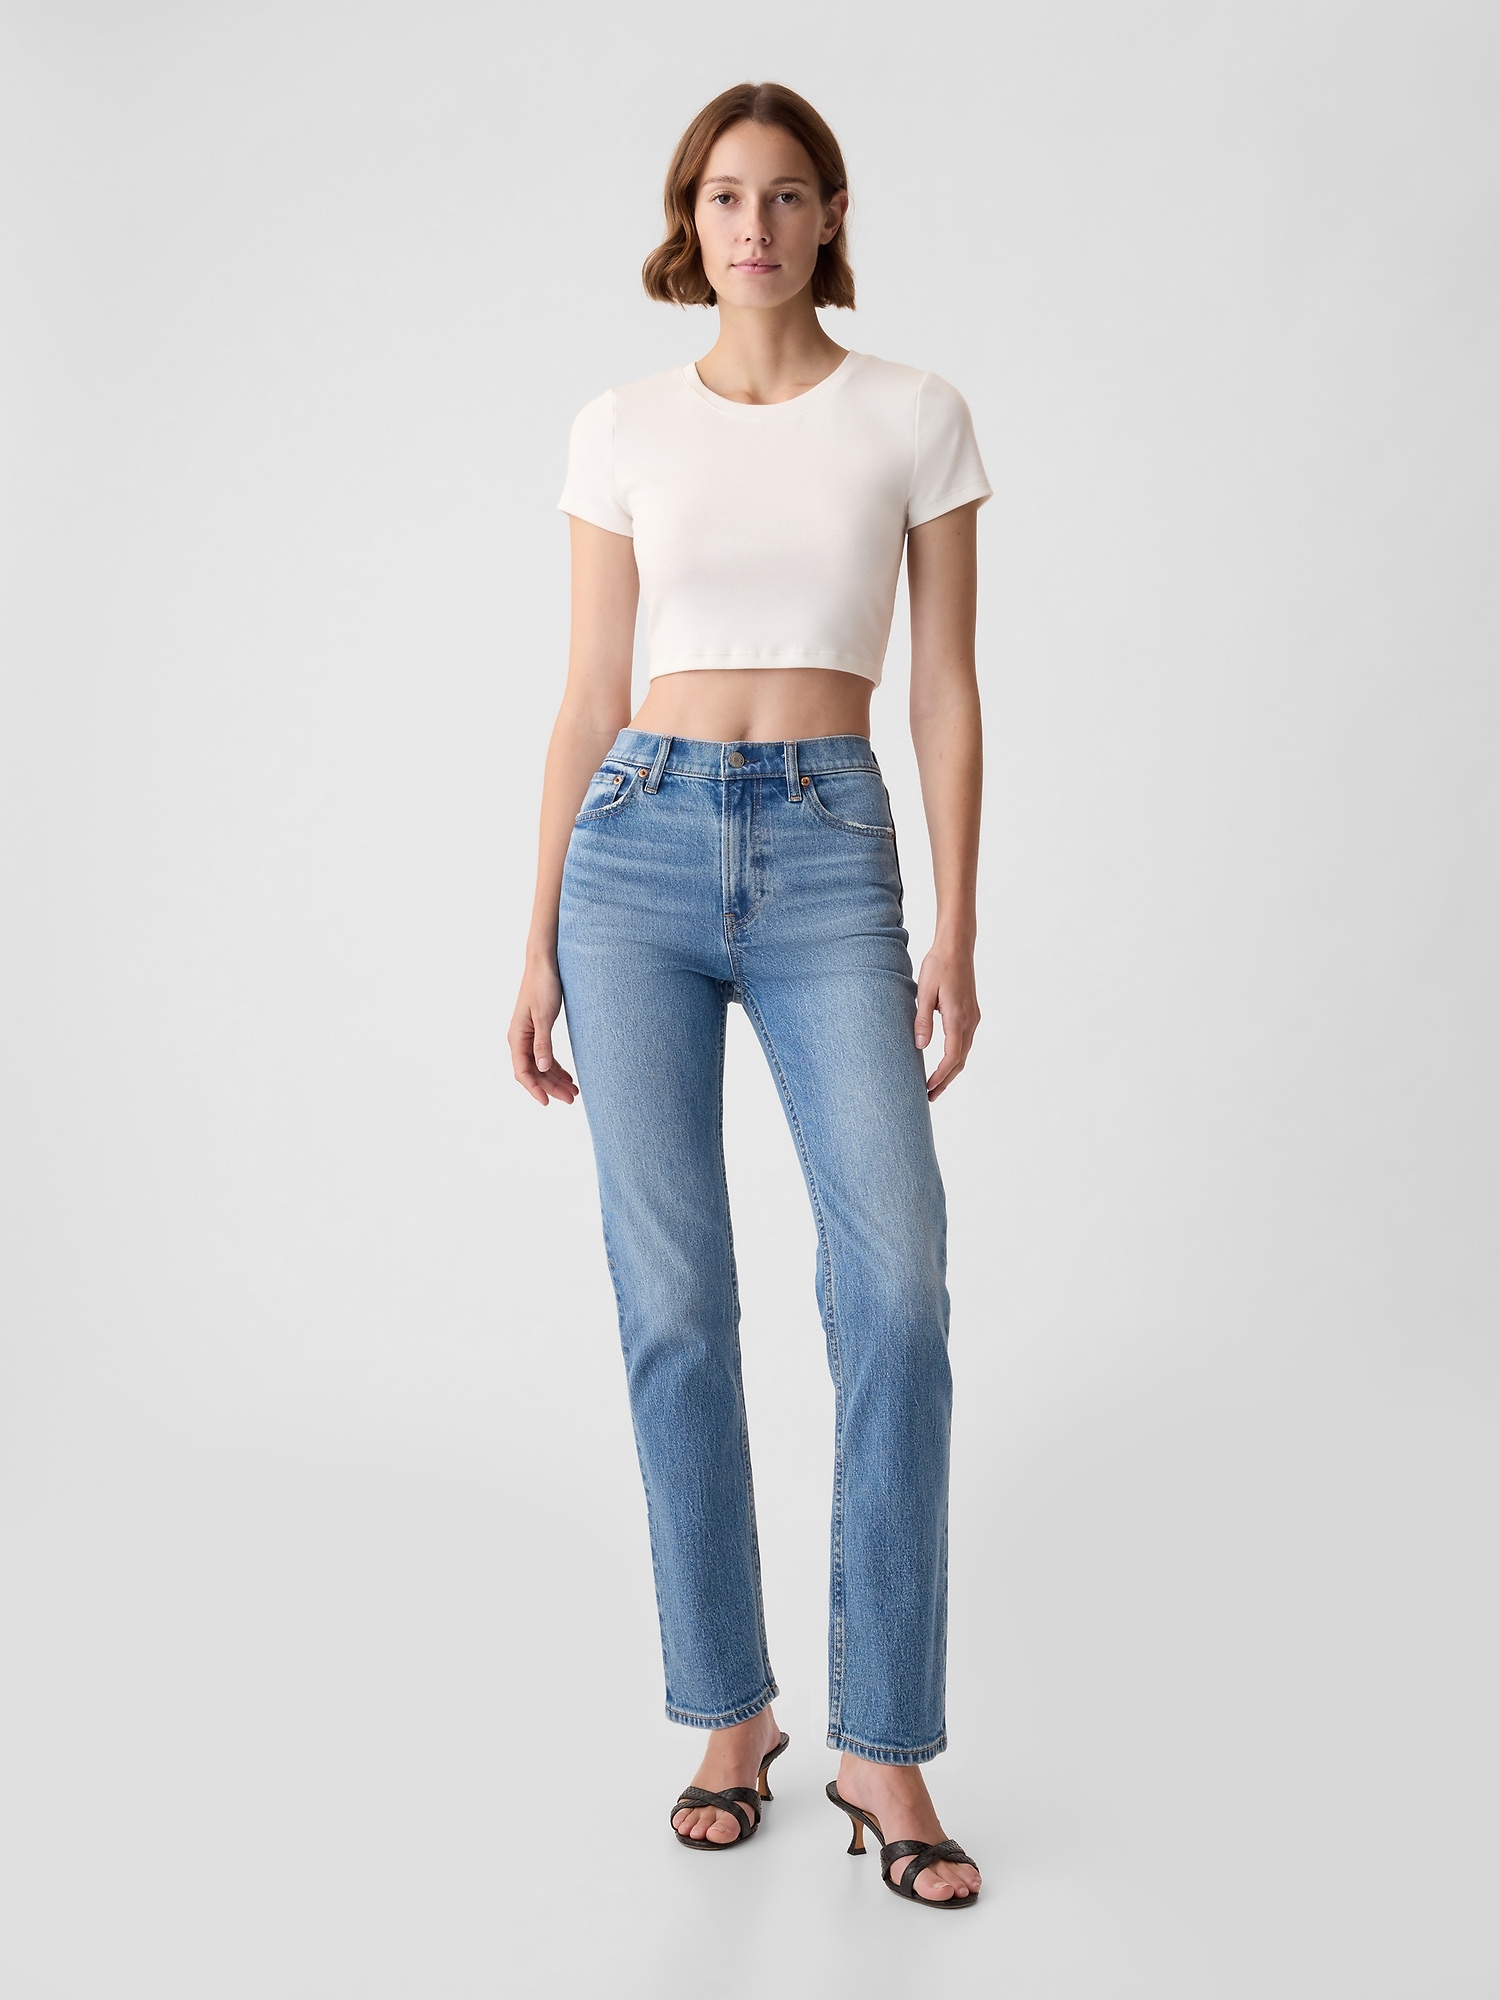 180 Best high waisted jeans ideas